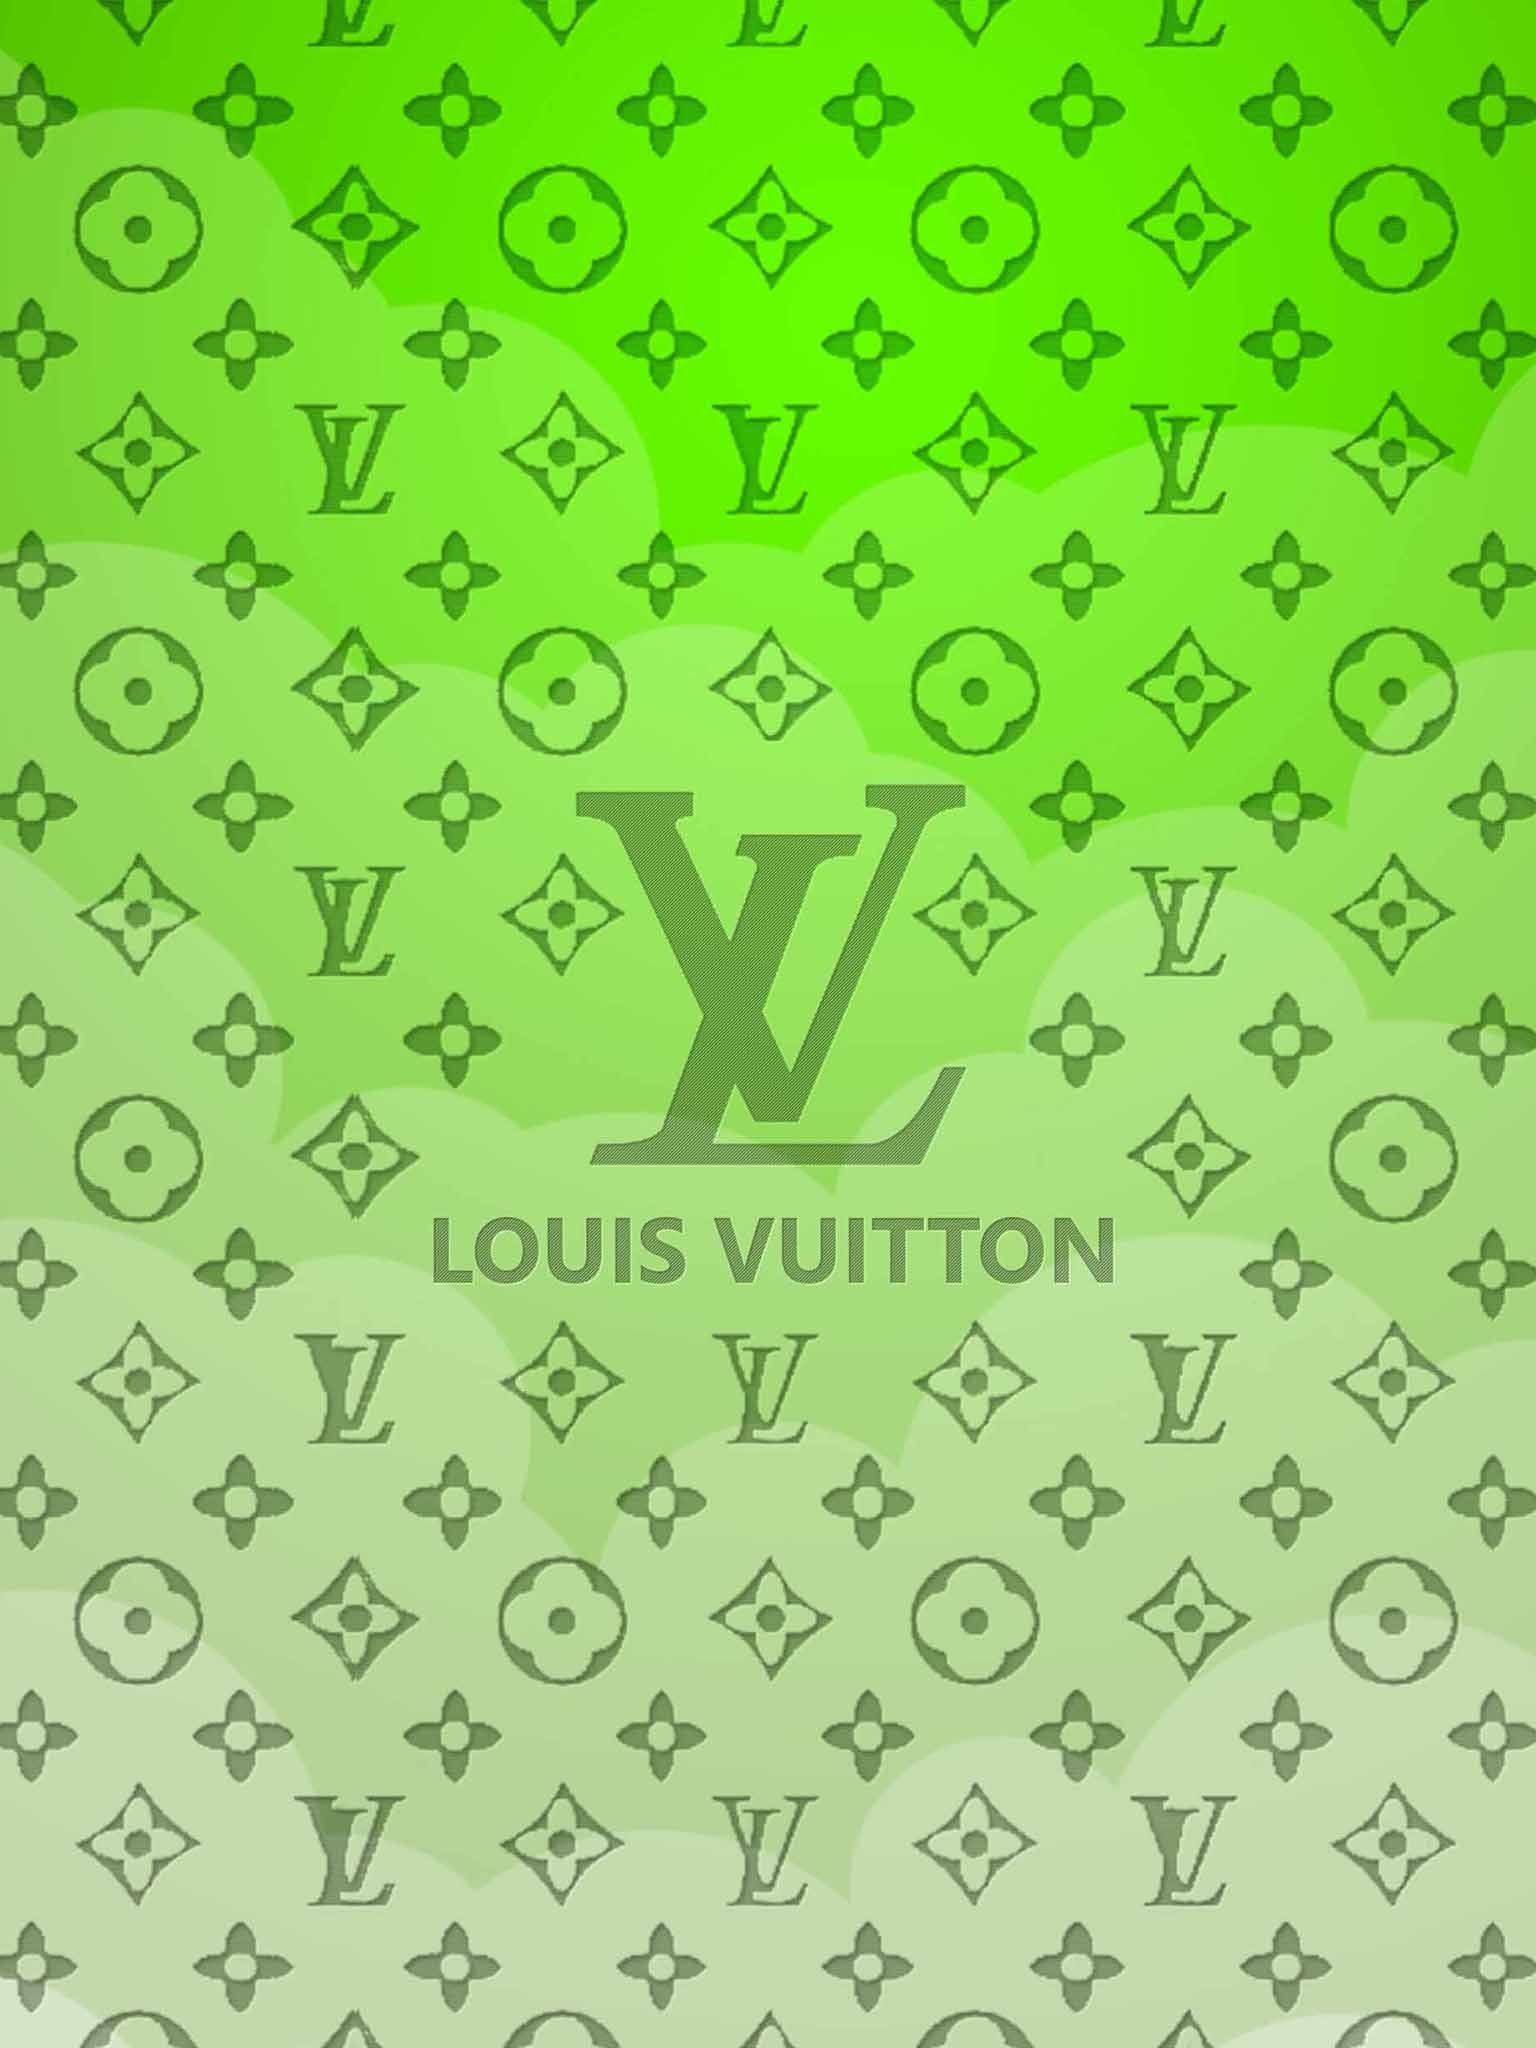 Louis Vuitton wallpapers 2019  Iphone wallpaper, Dark green wallpaper,  Dark green aesthetic